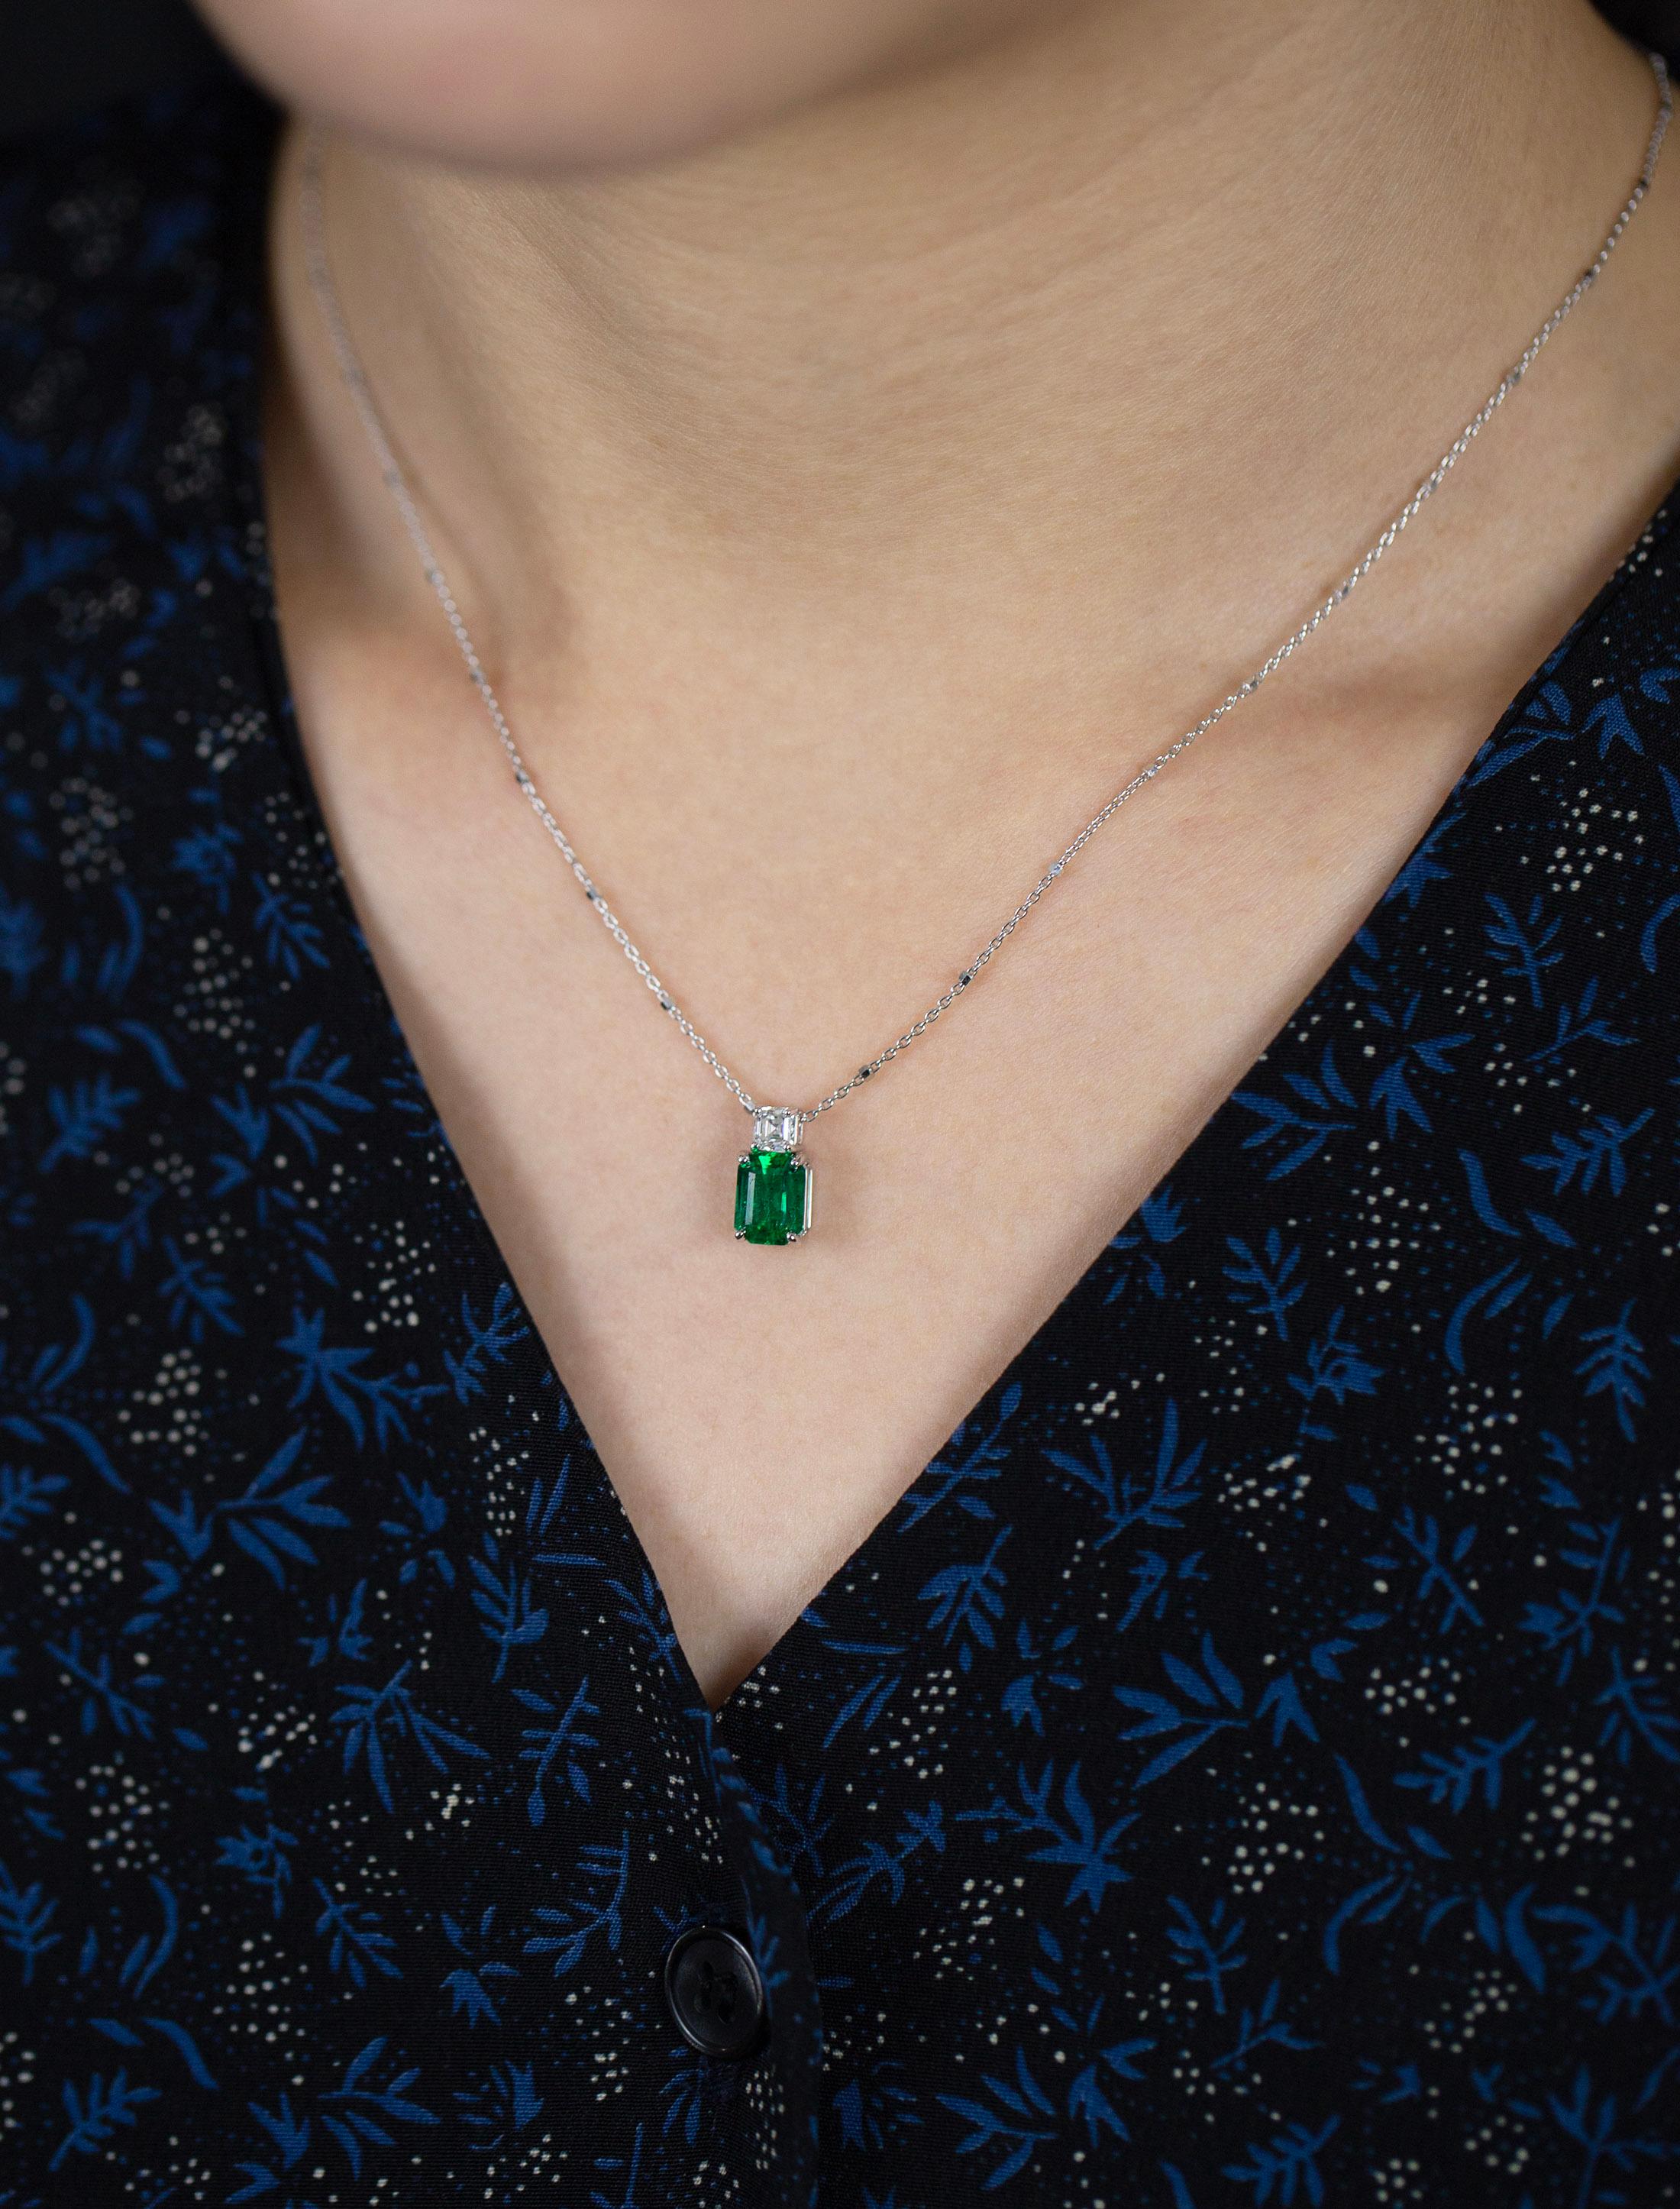 Roman Malakov 1.27 Carat Emerald Cut Green Emerald and Diamond Pendant Necklace In New Condition For Sale In New York, NY